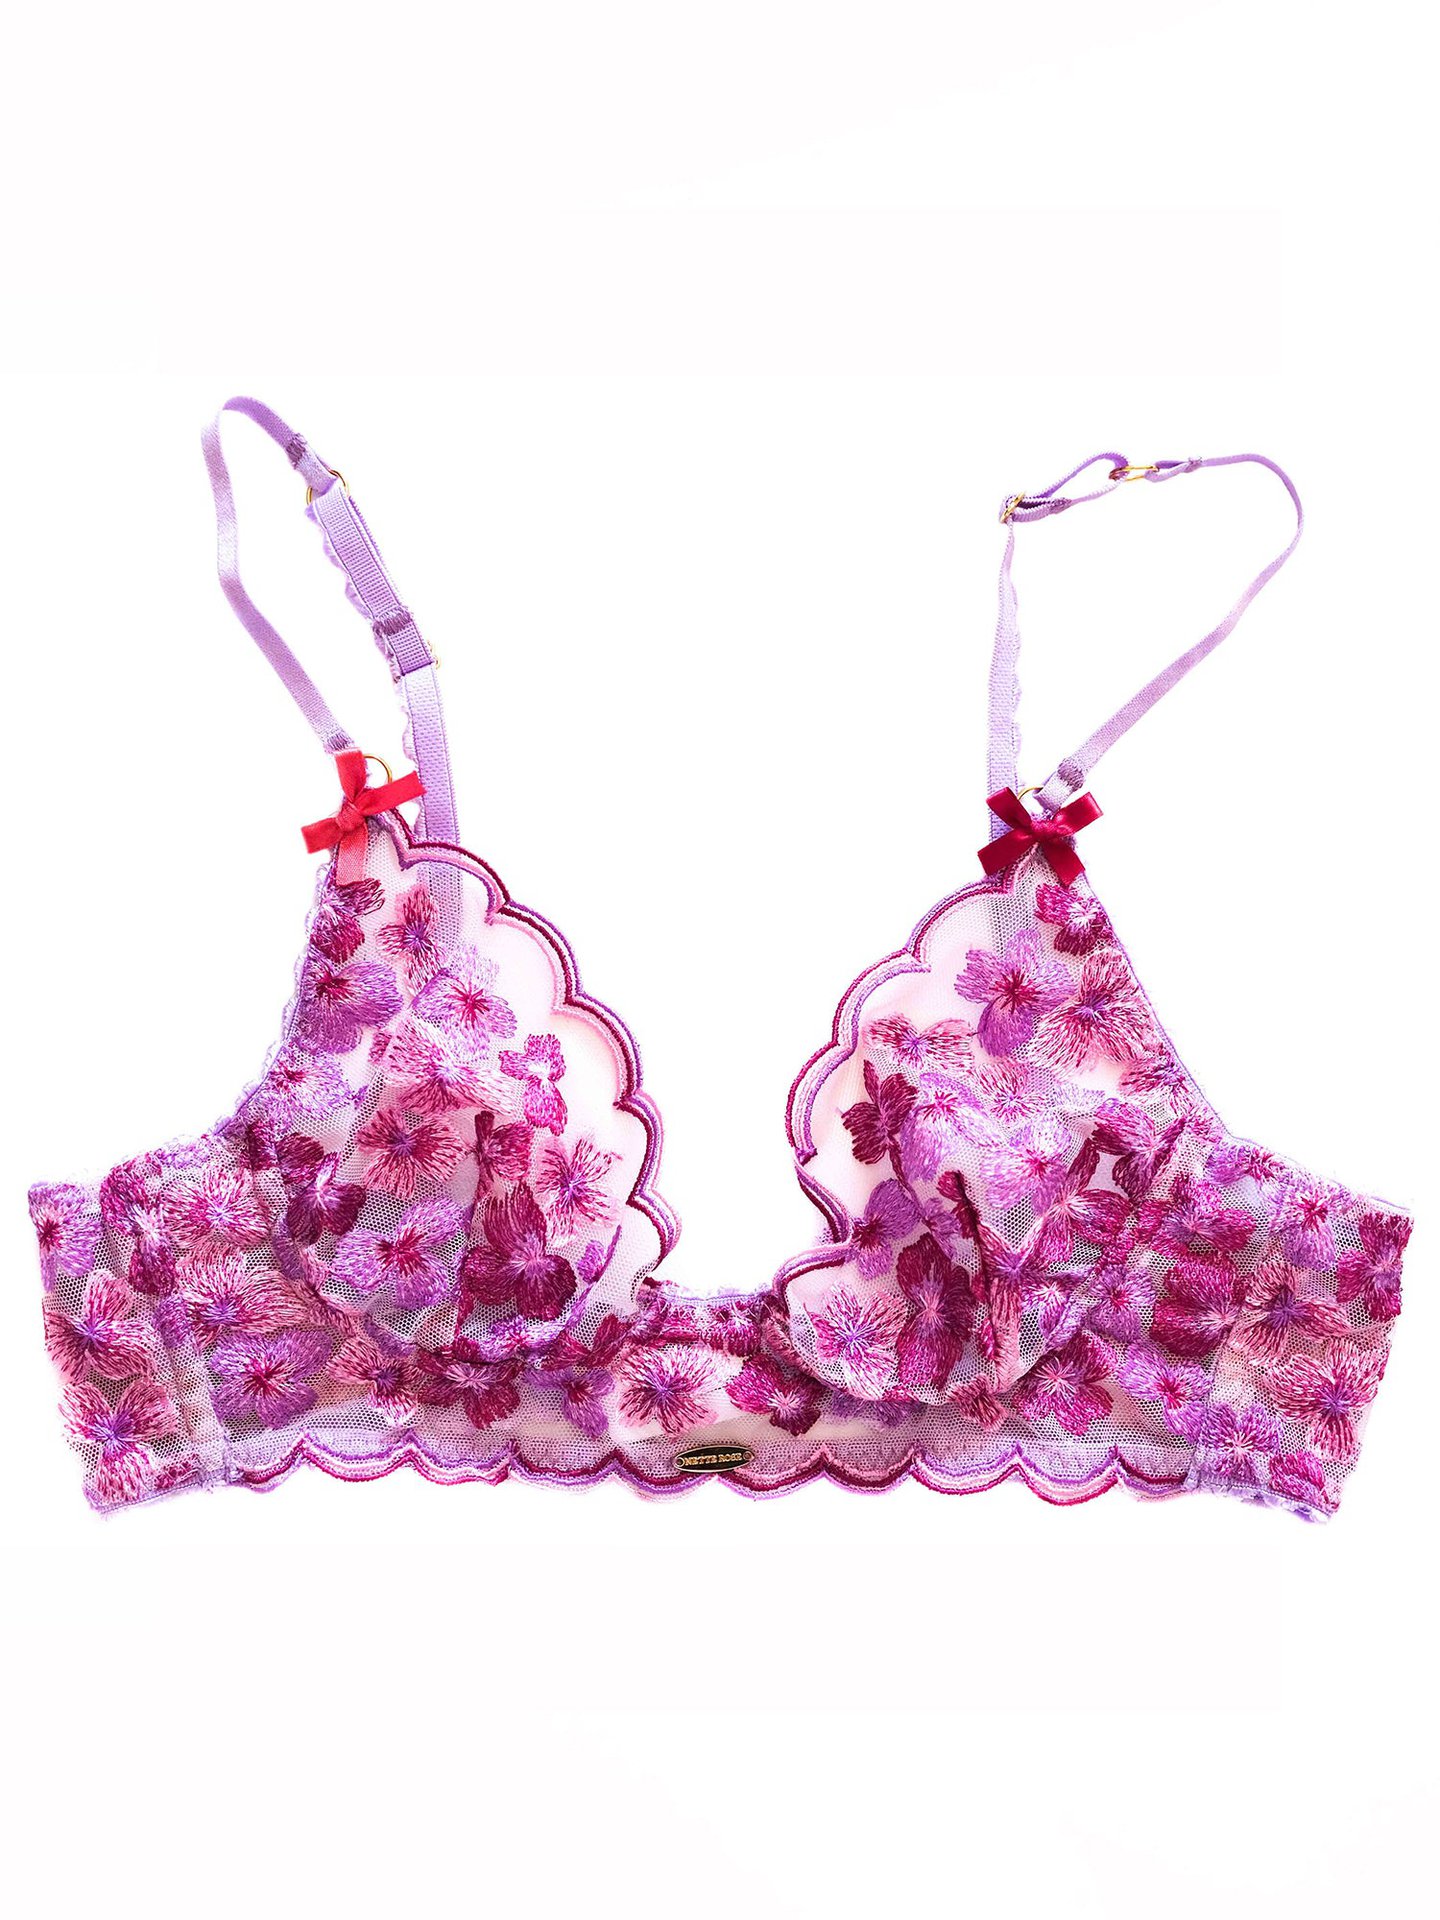 PINK Victoria's Secret, Intimates & Sleepwear, Vs Pink Bras